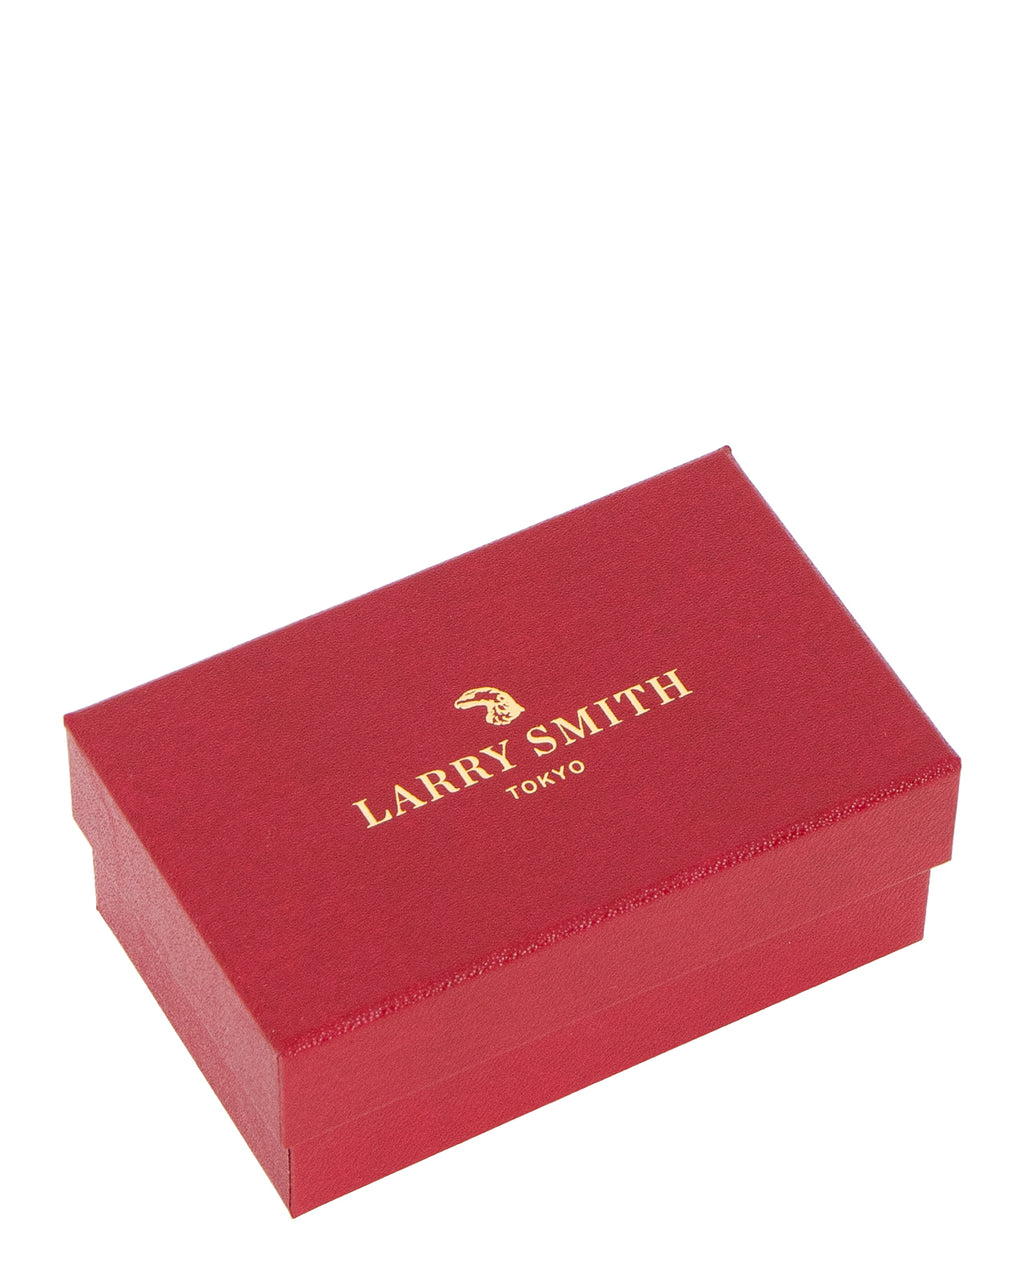 Larry Smith Silver Chain, 60cm, Small